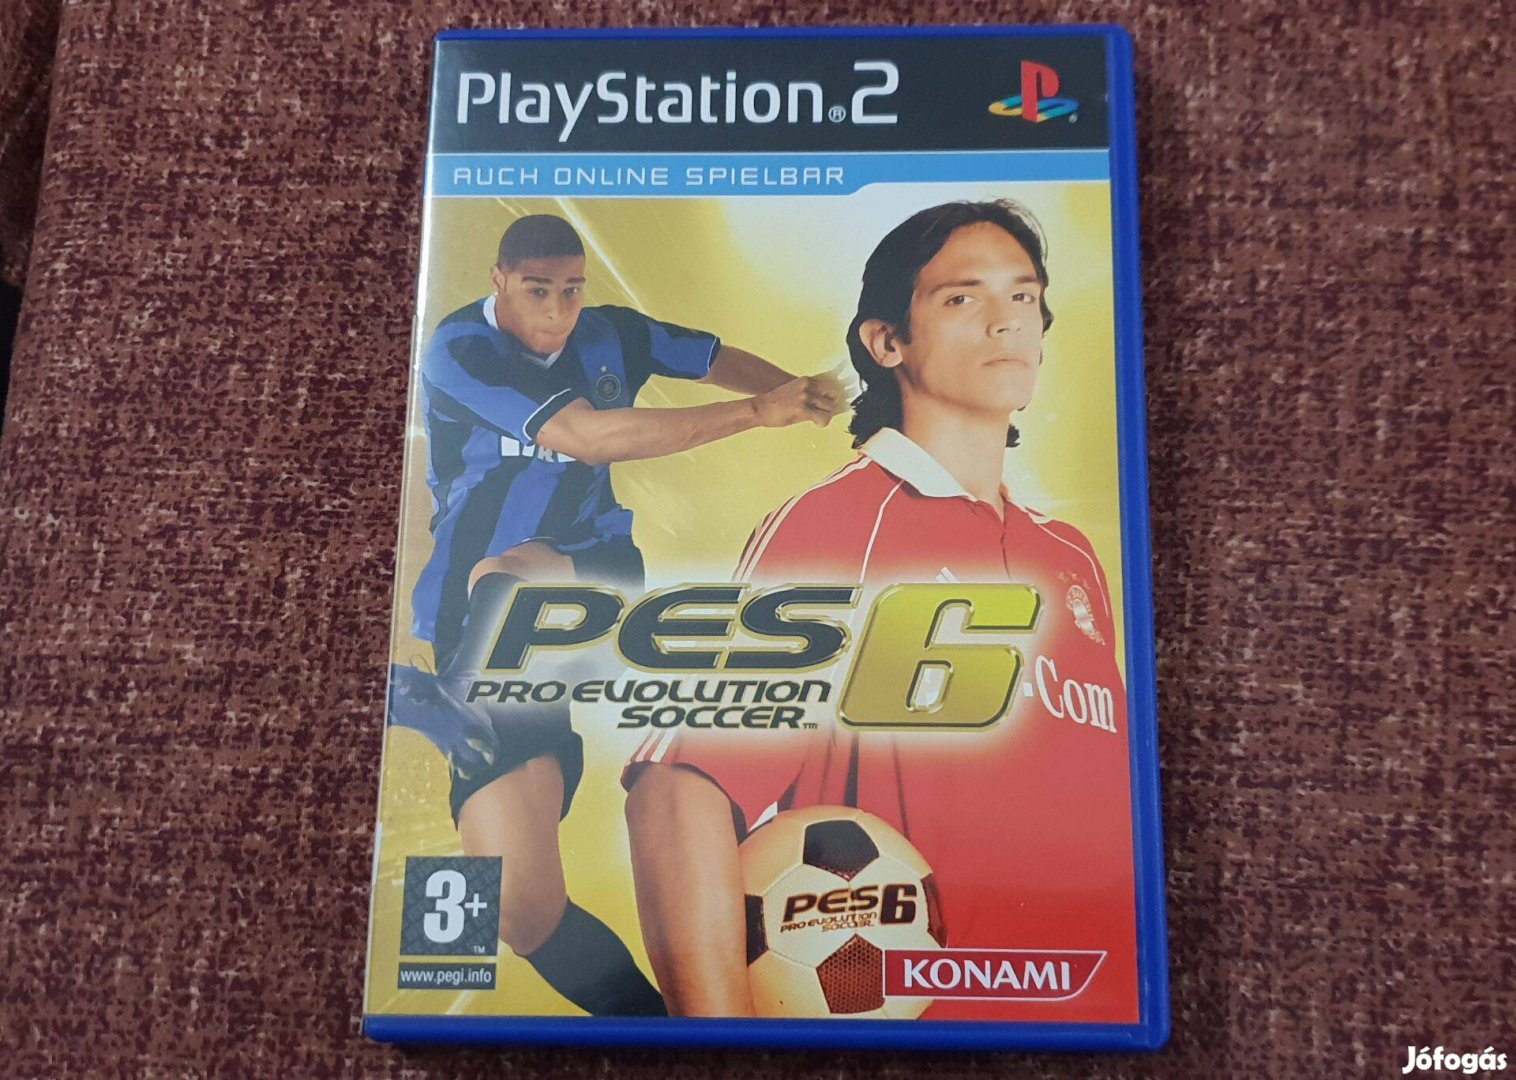 Pes 6 - Playstation 2 eredeti lemez ( 2000 Ft )